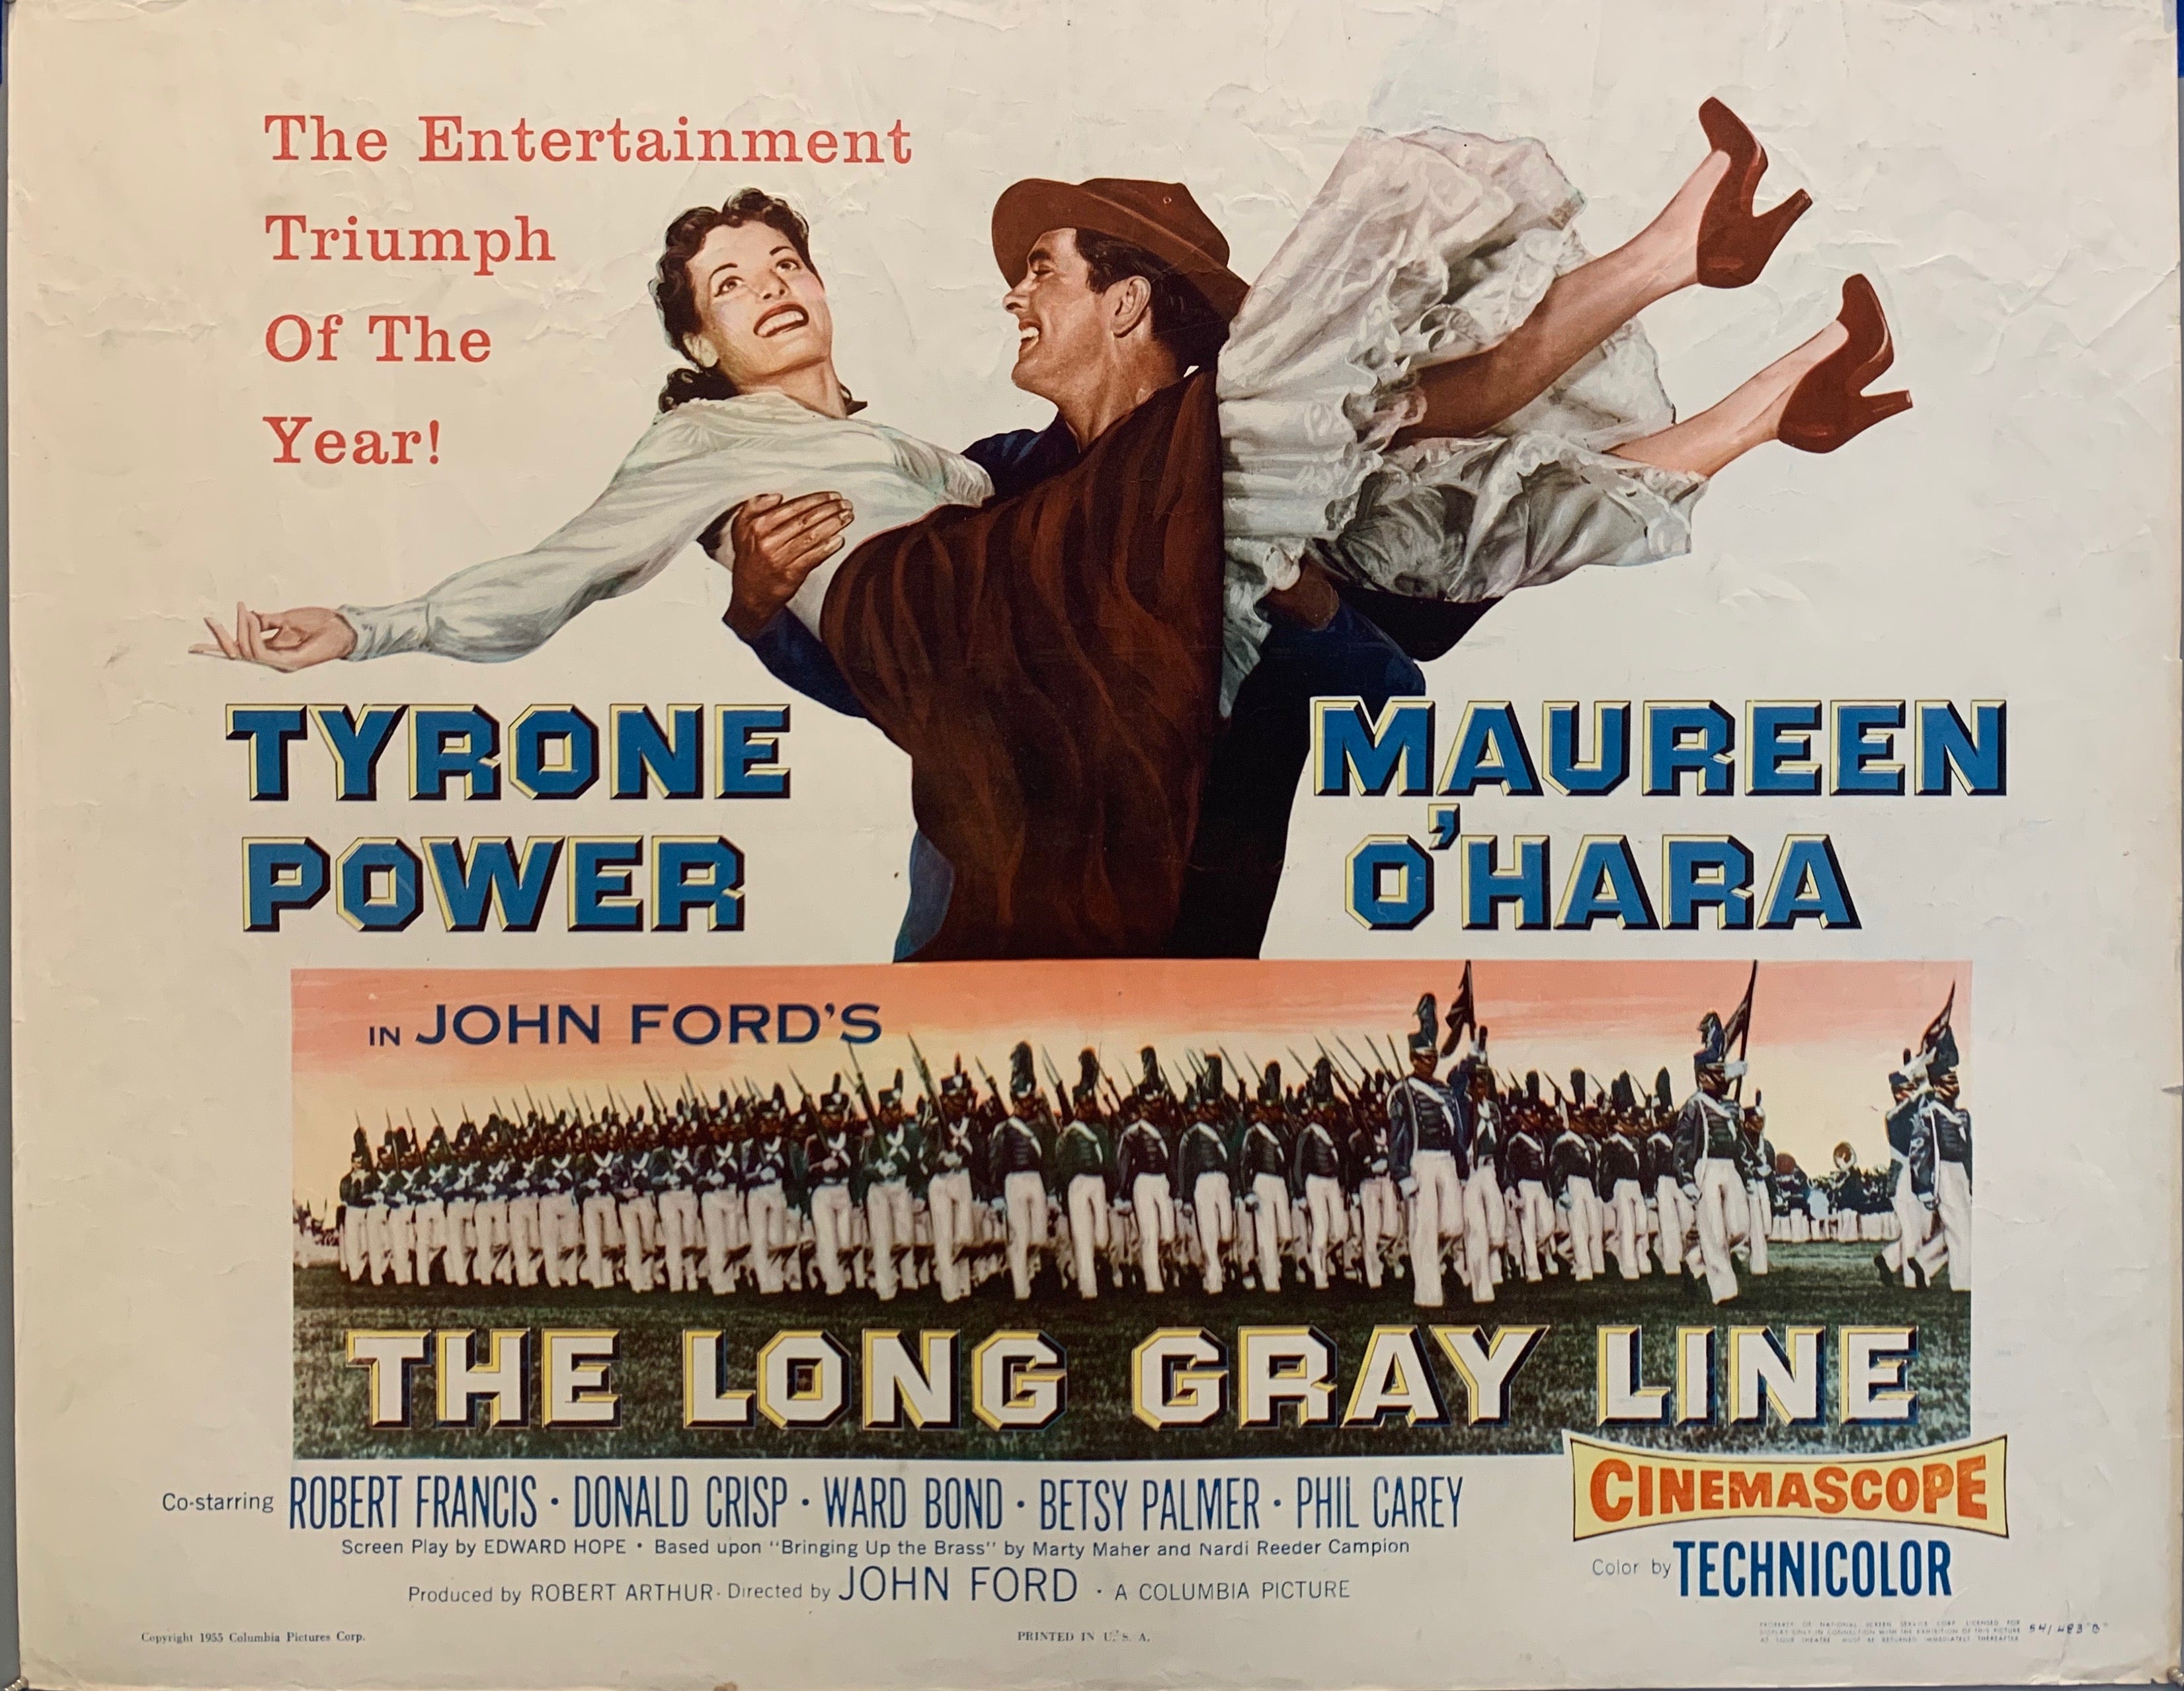 power movie posters